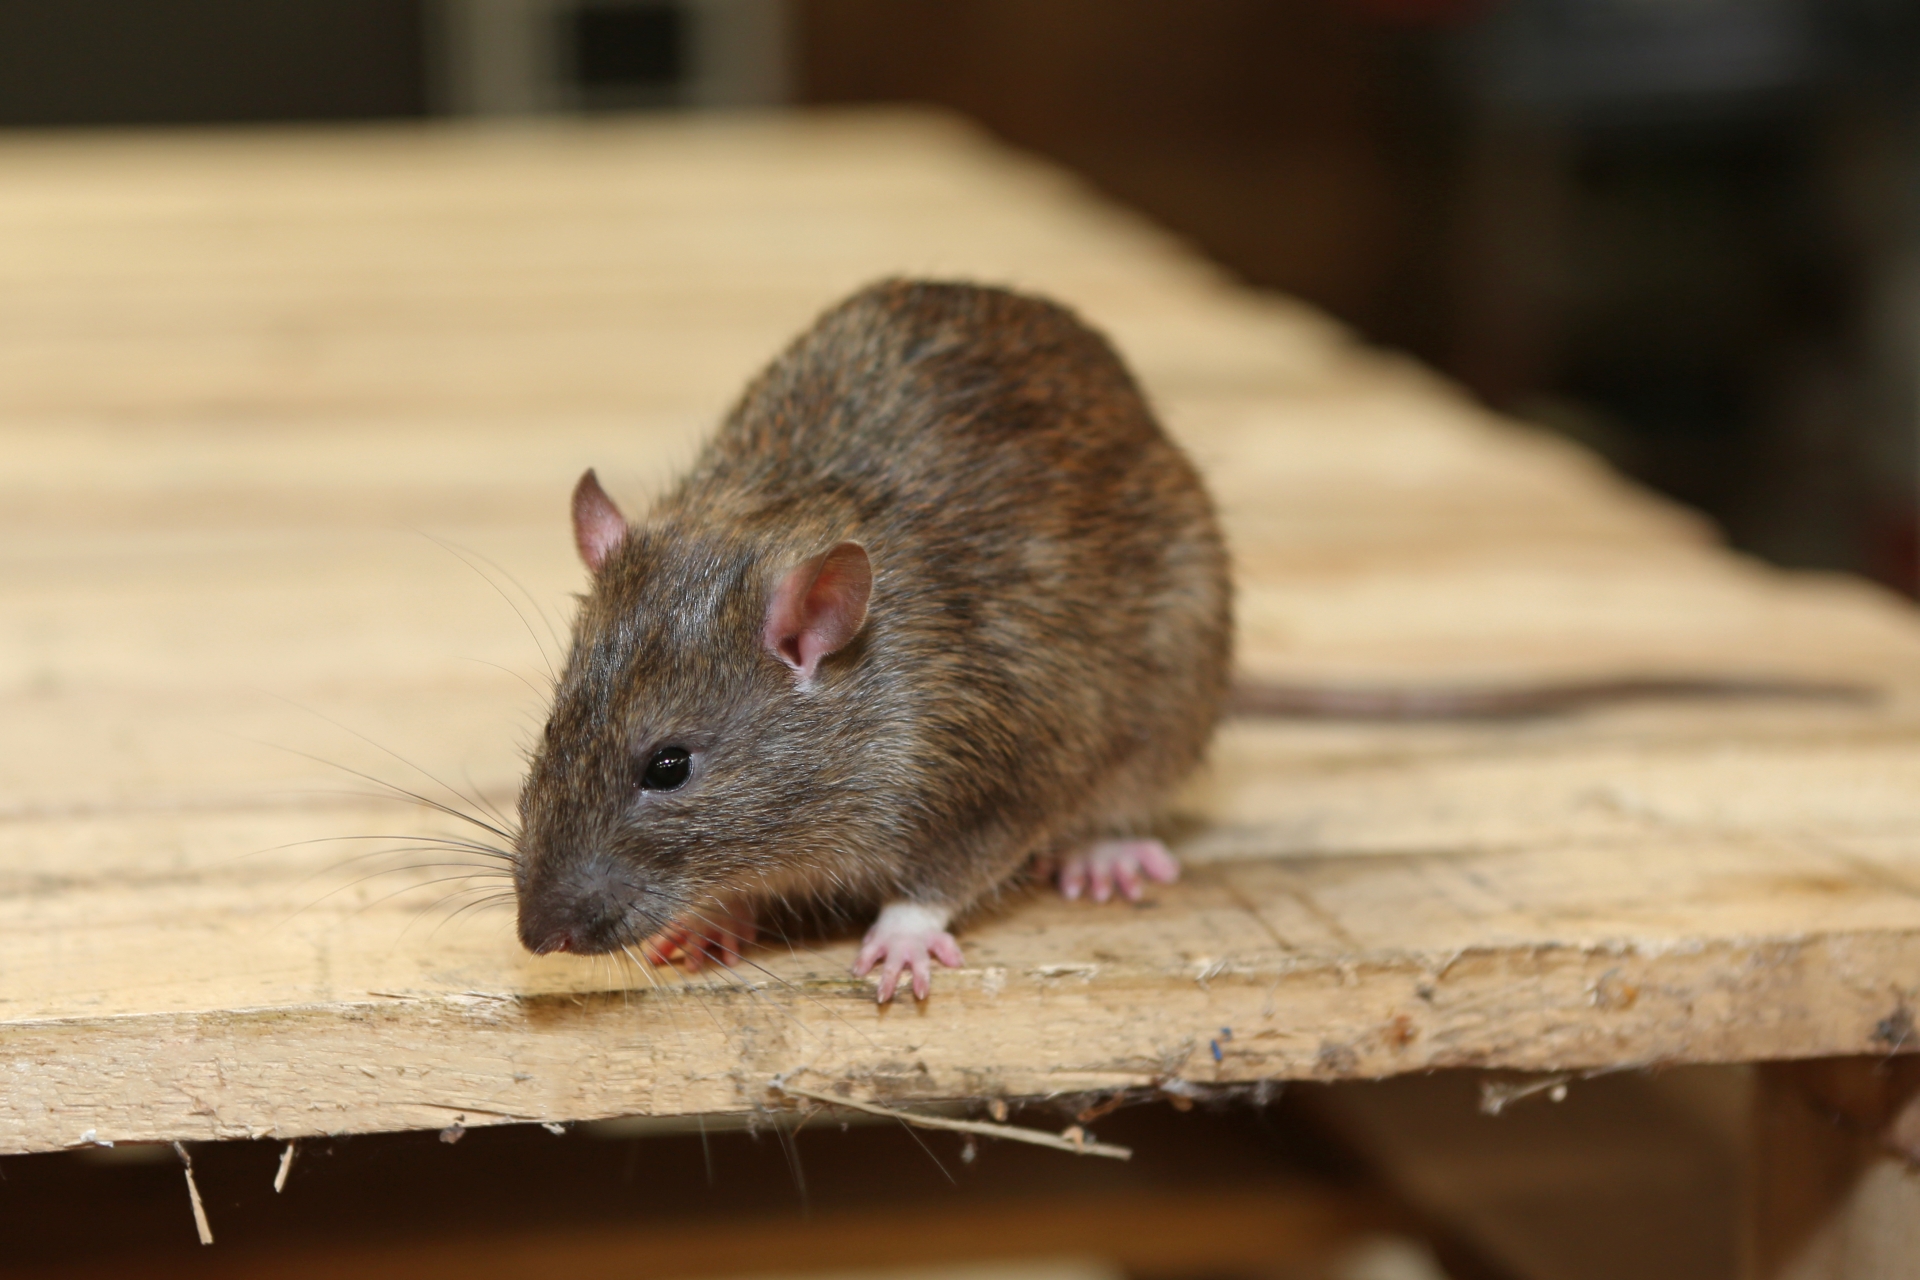 Rat Infestation, Pest Control in Epsom, Horton, Longmead, KT19. Call Now 020 8166 9746